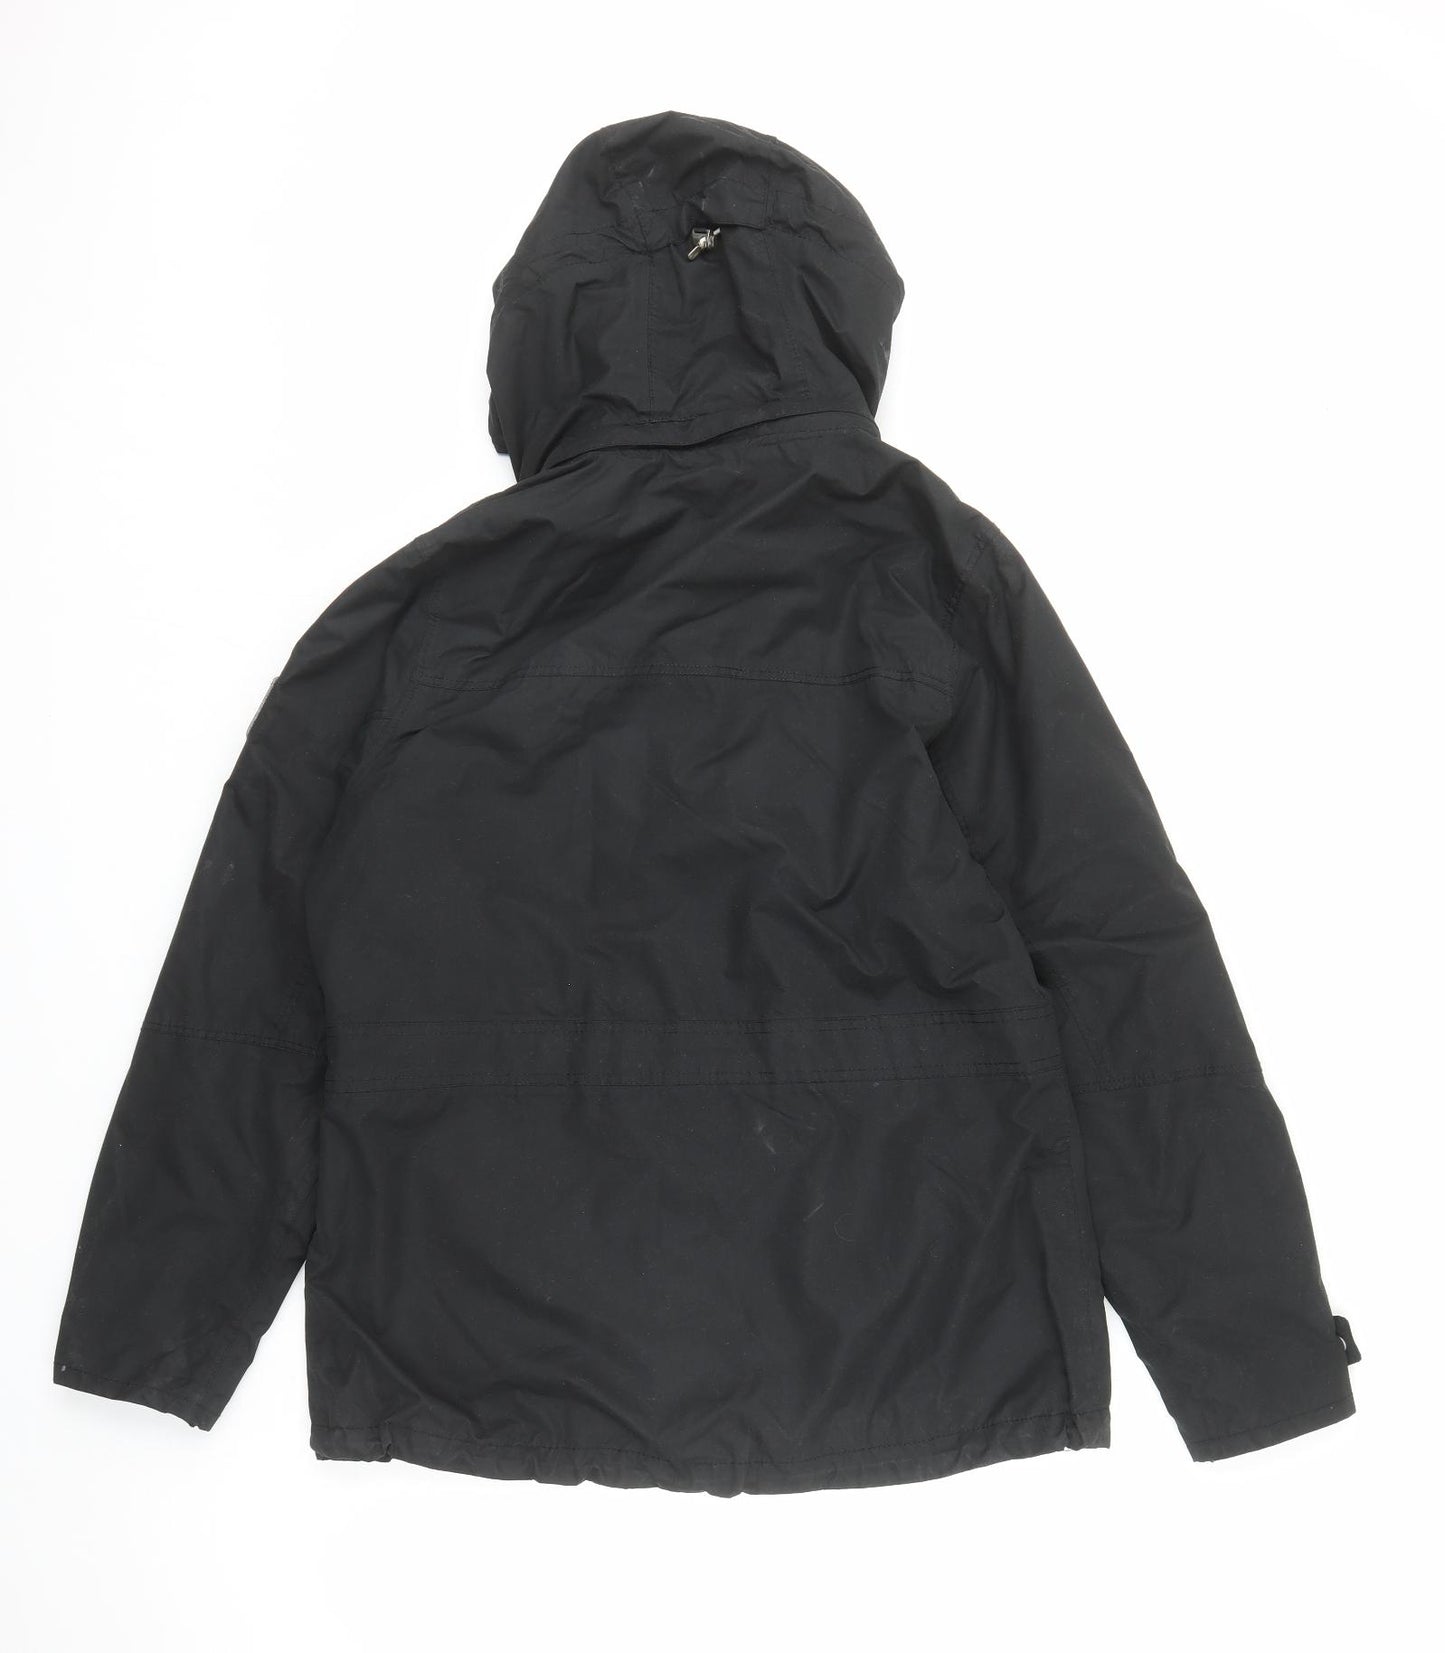 Regatta Mens Black Jacket Size M Zip - Estimated size M